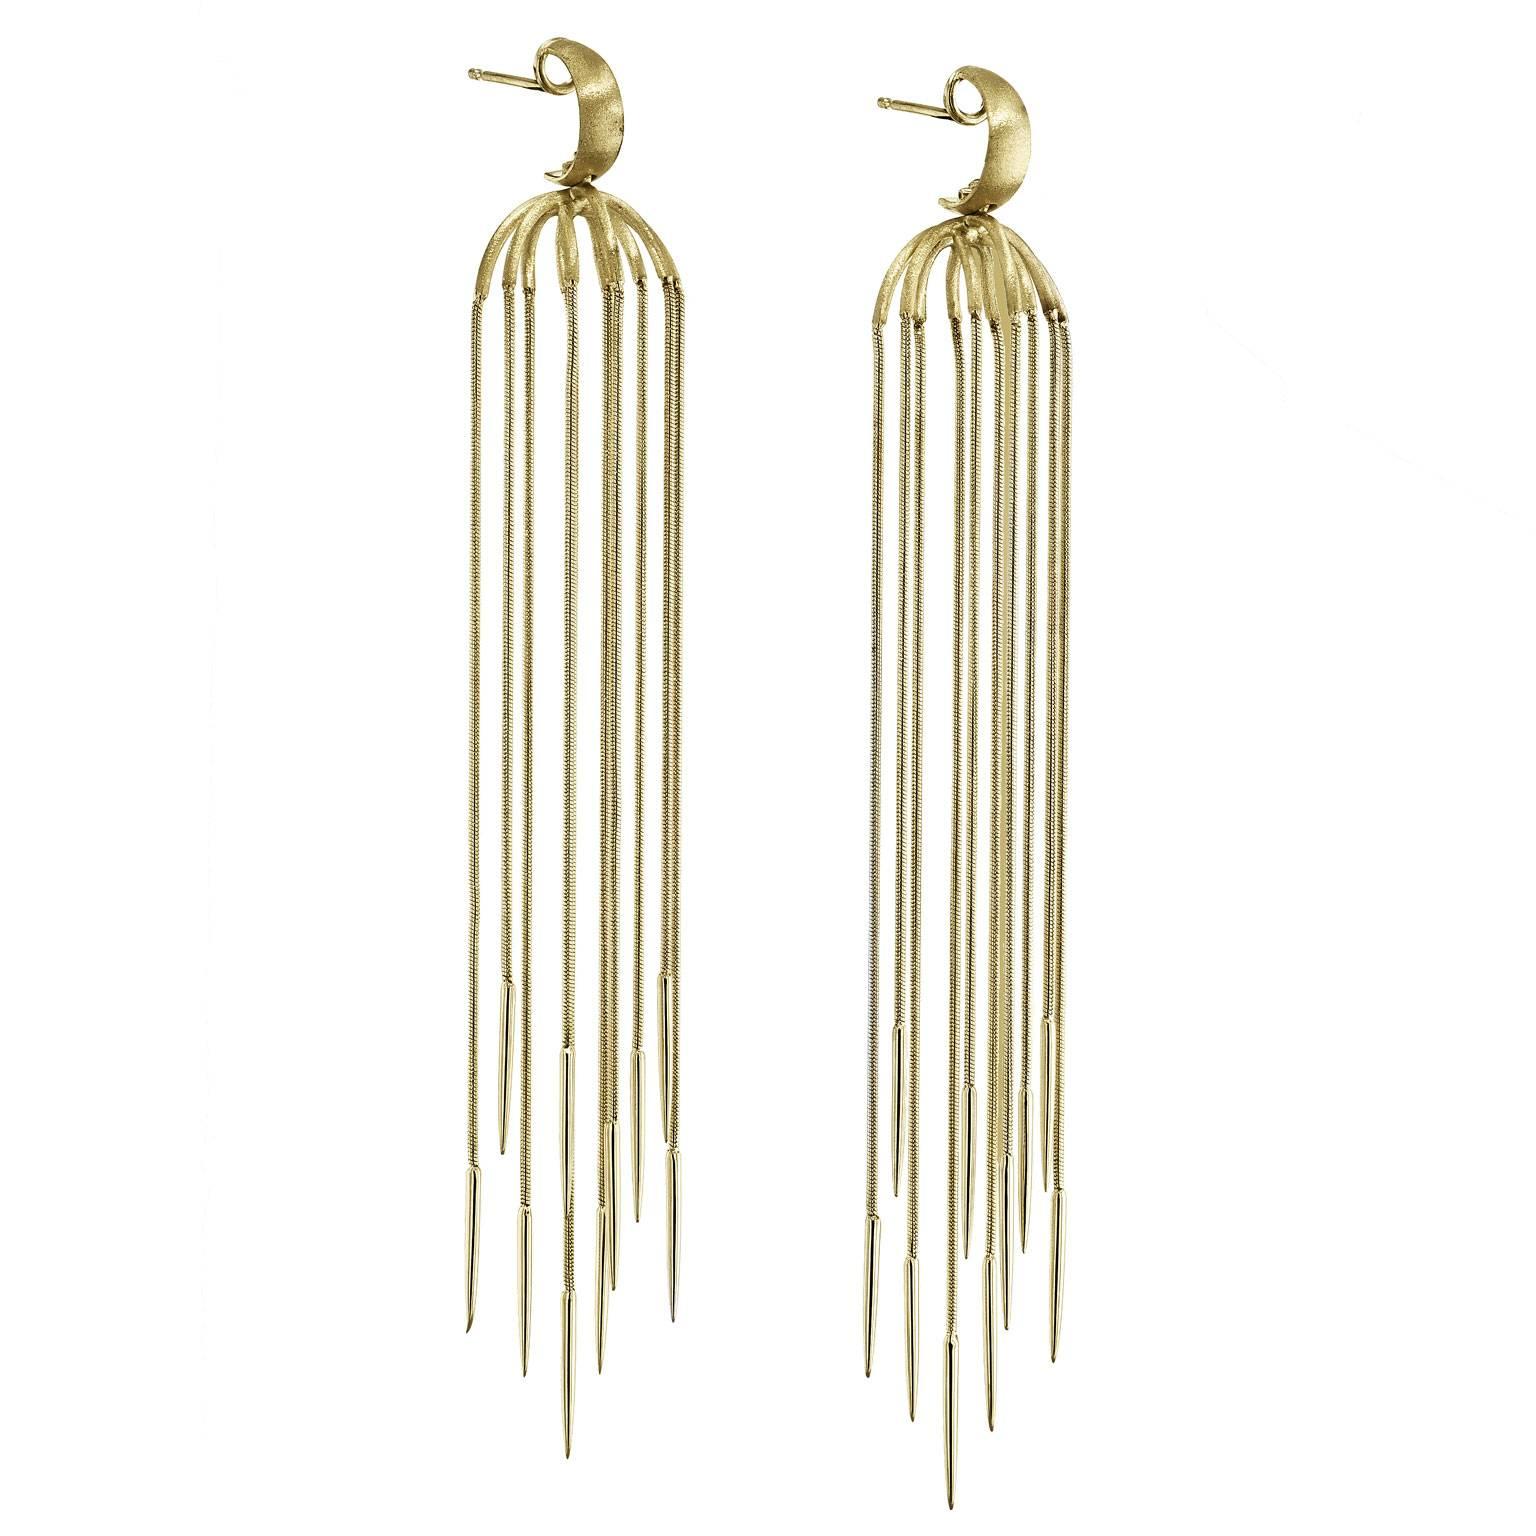 Fashioned in 18 karat yellow gold, these multi-chain spike design dangle earrings epitomize flirty fun.